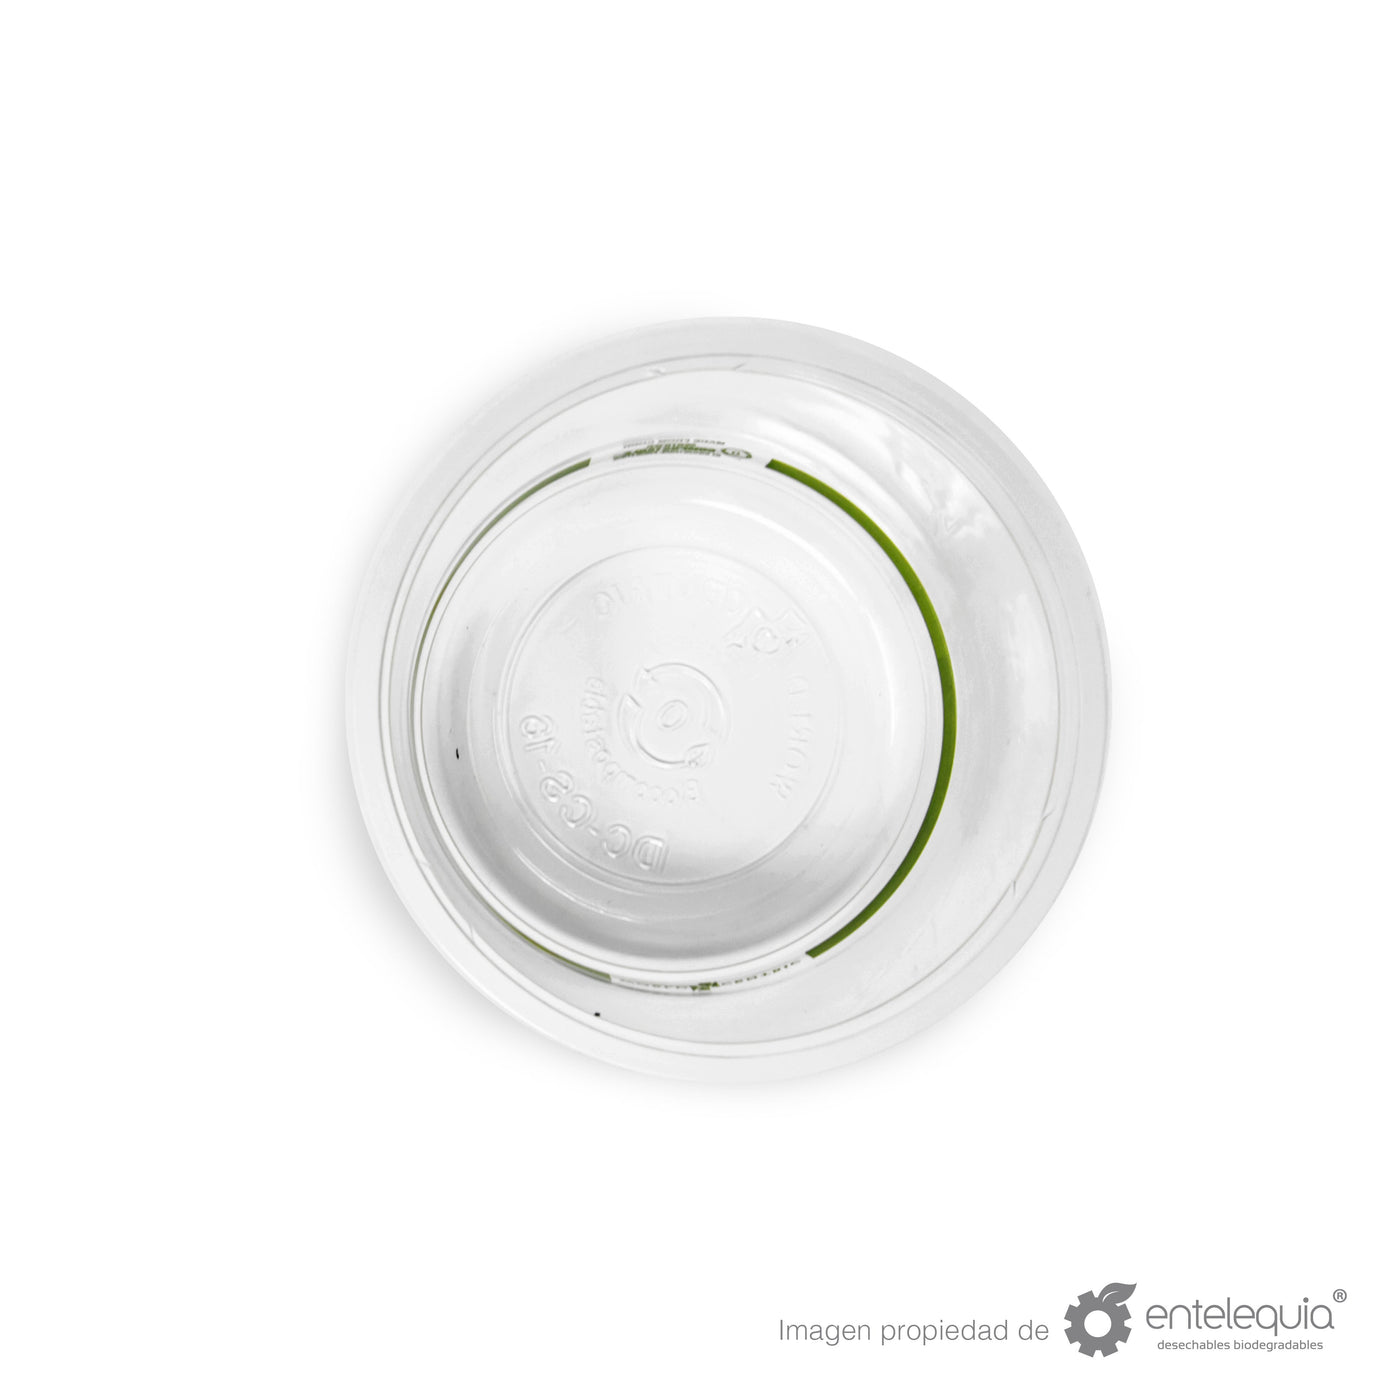 Bolsa #20 – Entelequia® Desechables Biodegradables